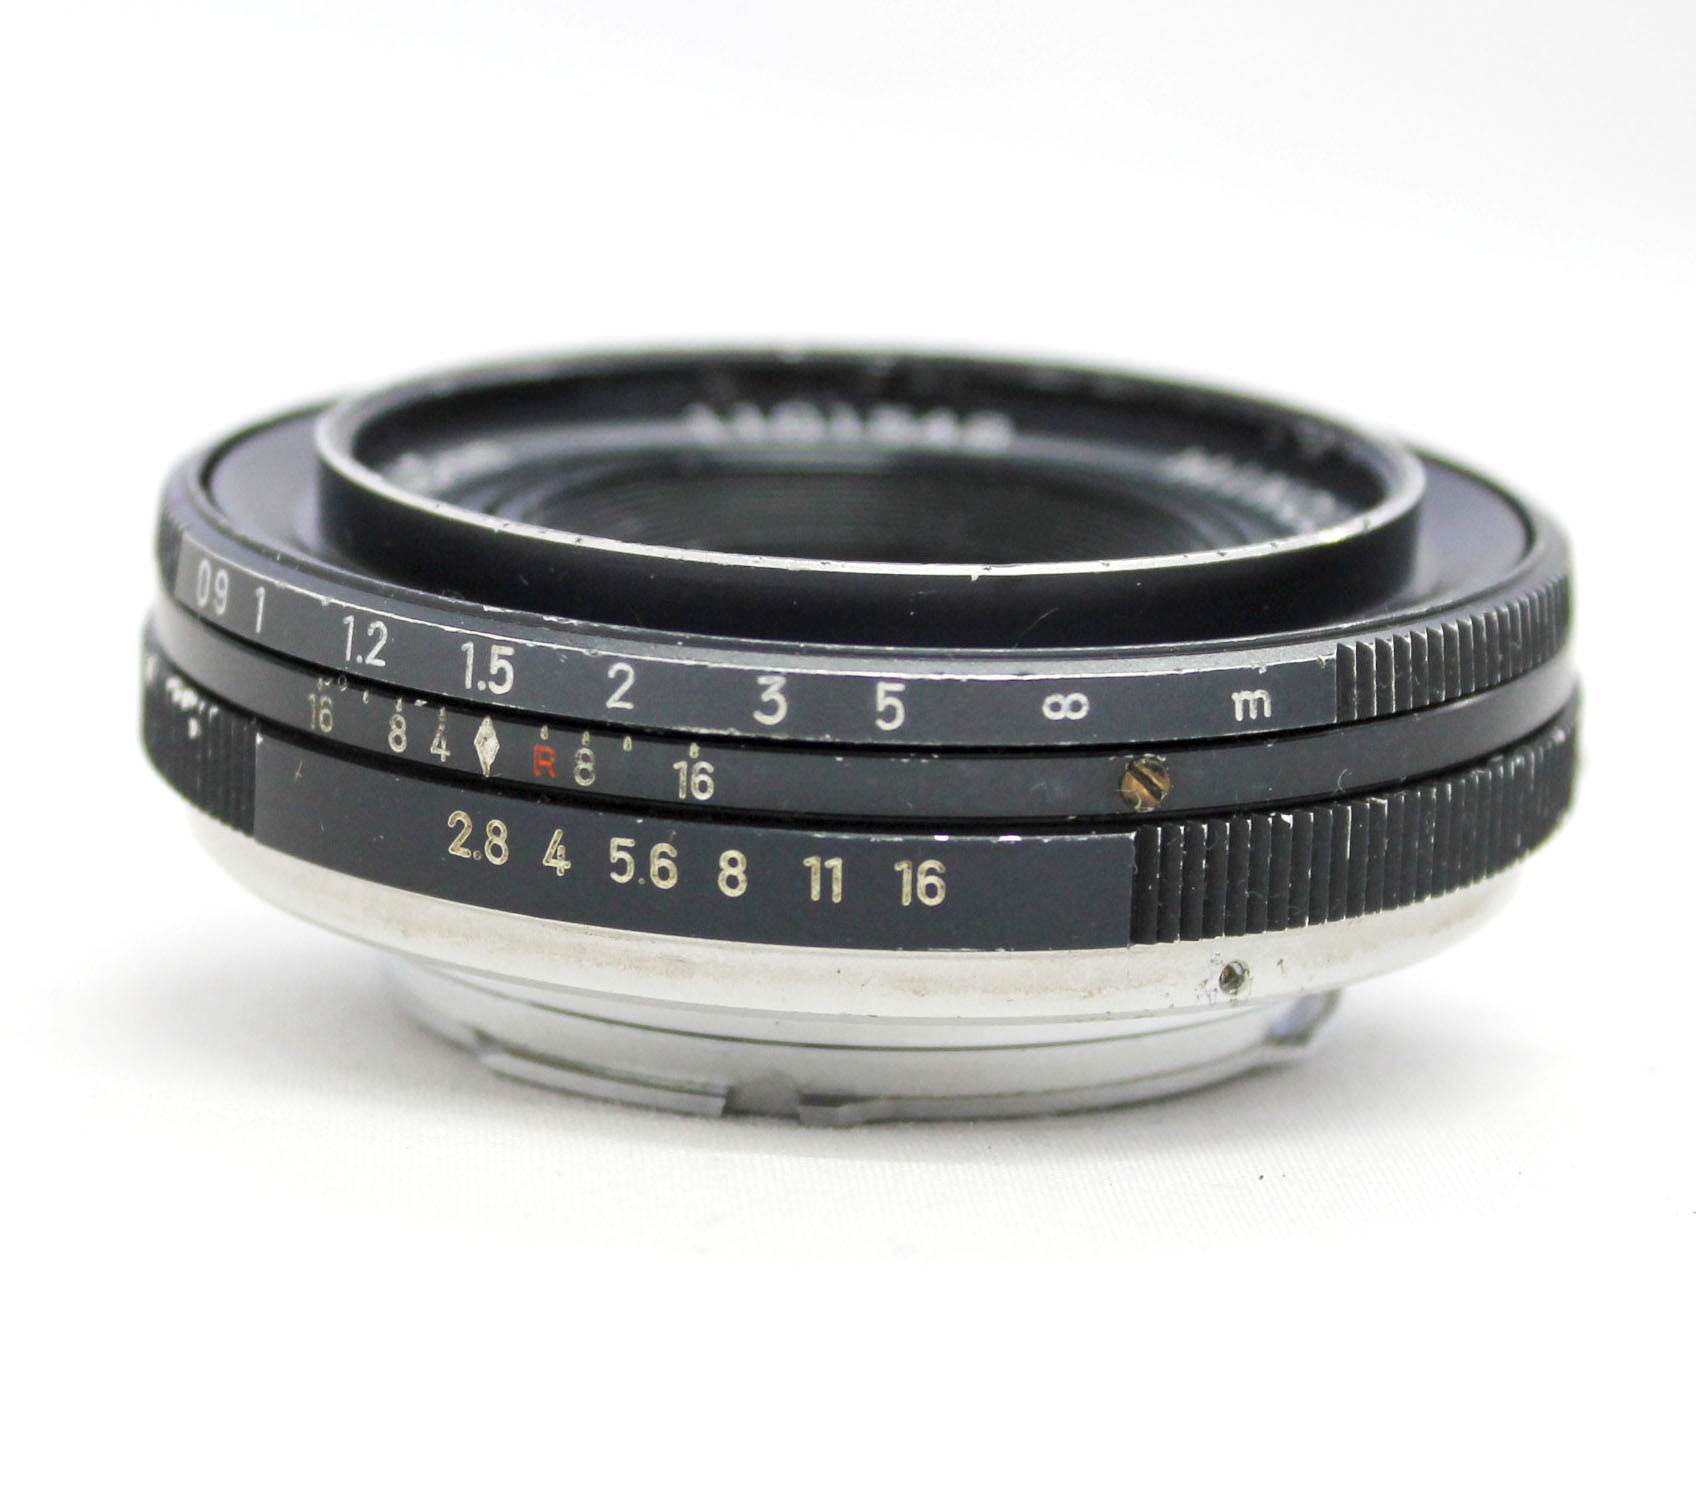 Minolta Rokkor-TD 45mm F/2.8 MF Pancake Lens for SR Mount from 